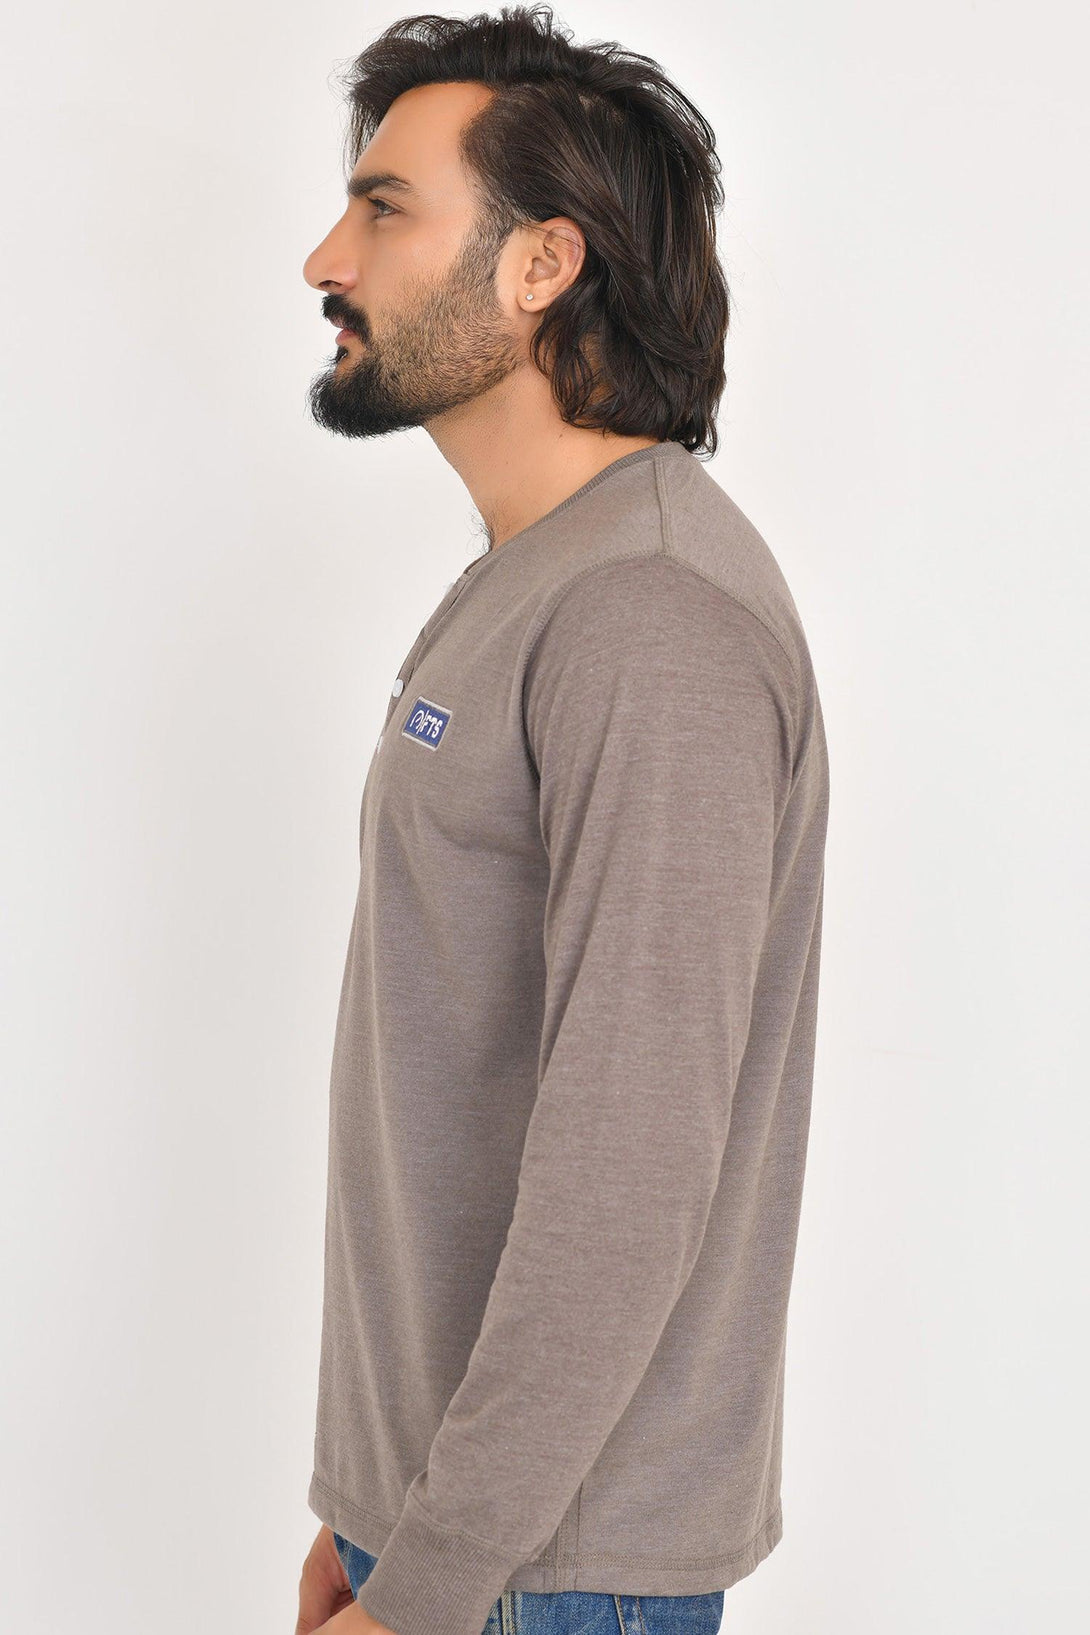 HENLEY Full Sleeve Shirts | DK GREY & AQUA Pack of 2 - FTS